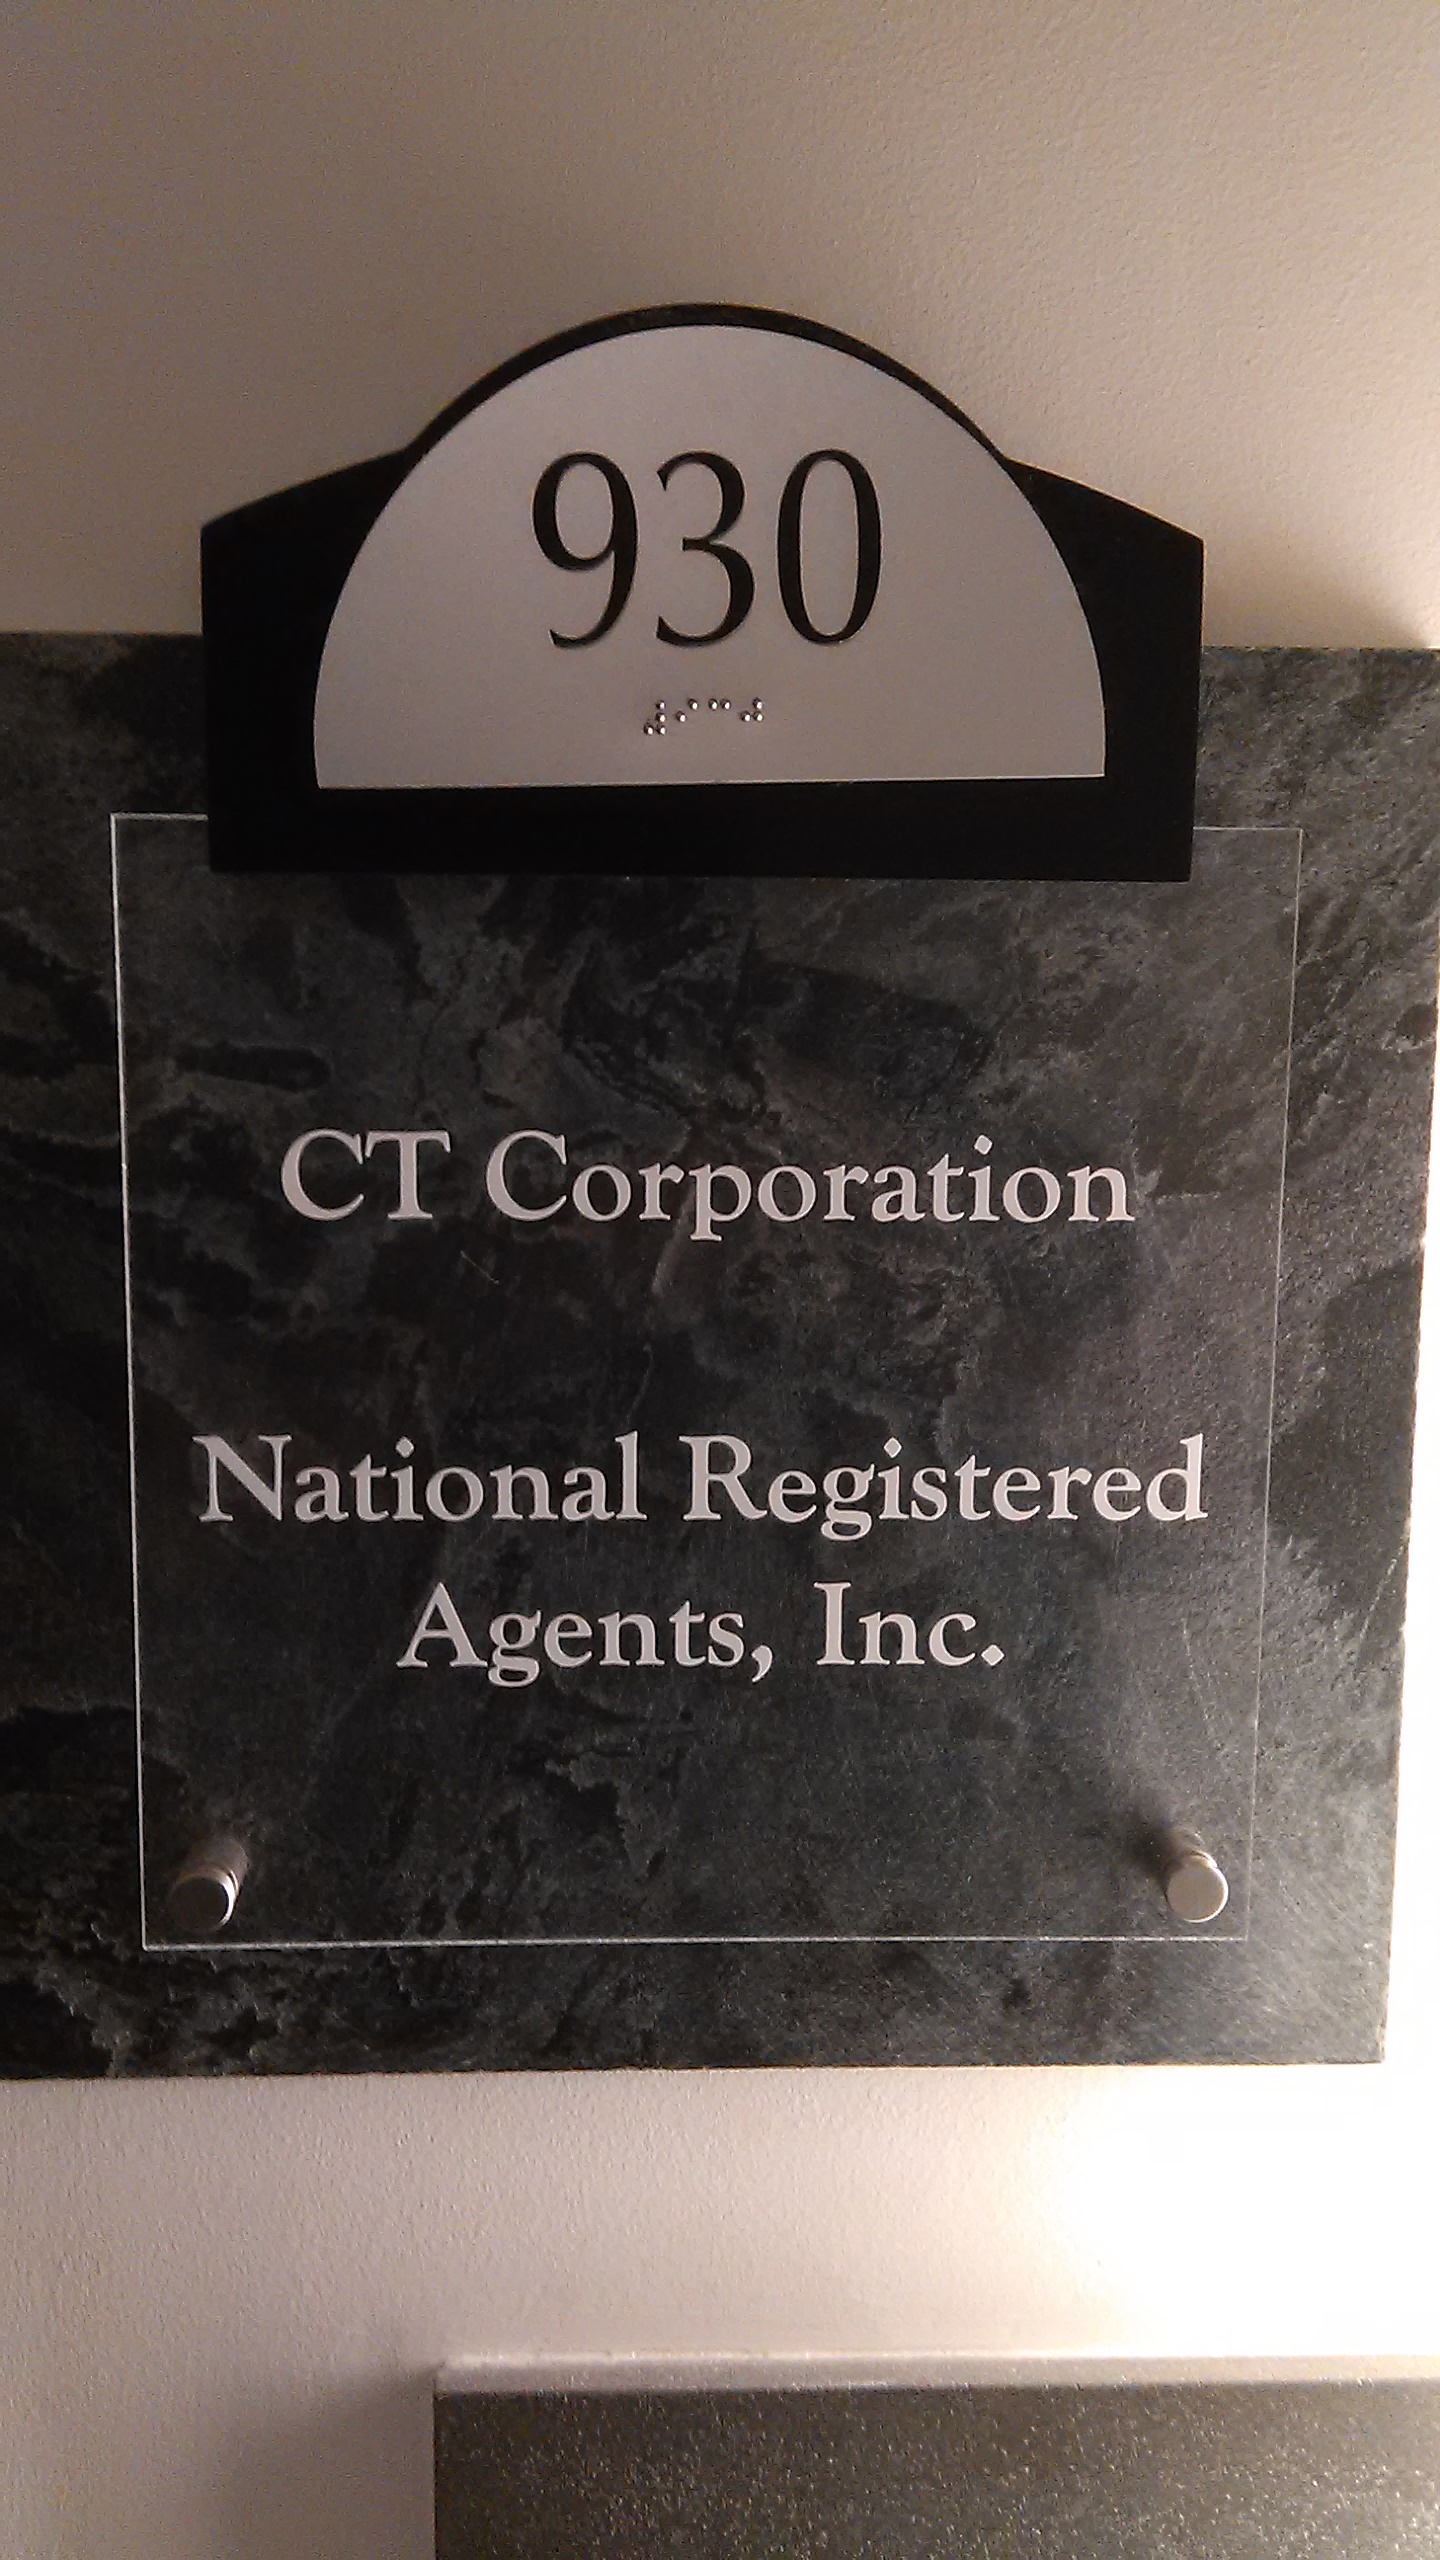 CT Corporation Process Server